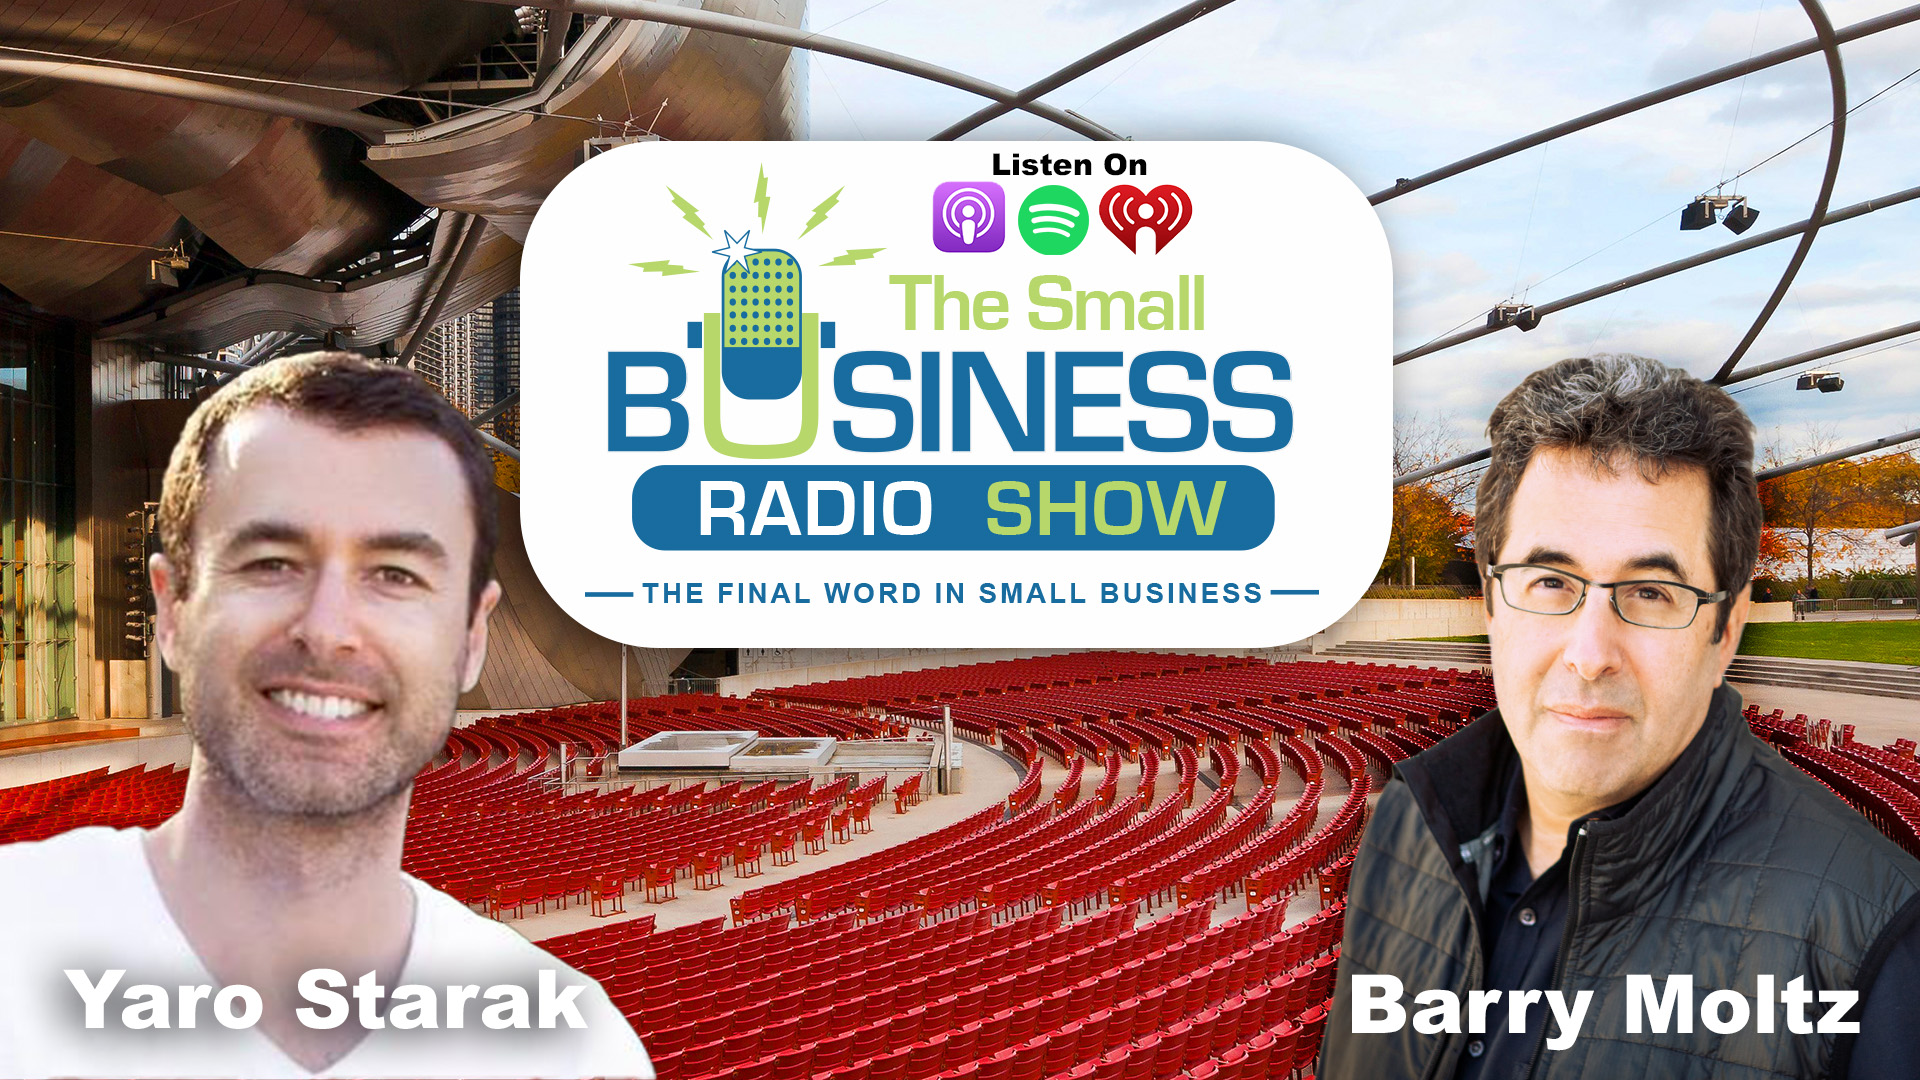 Yaro Starak on The Small Business Radio Show